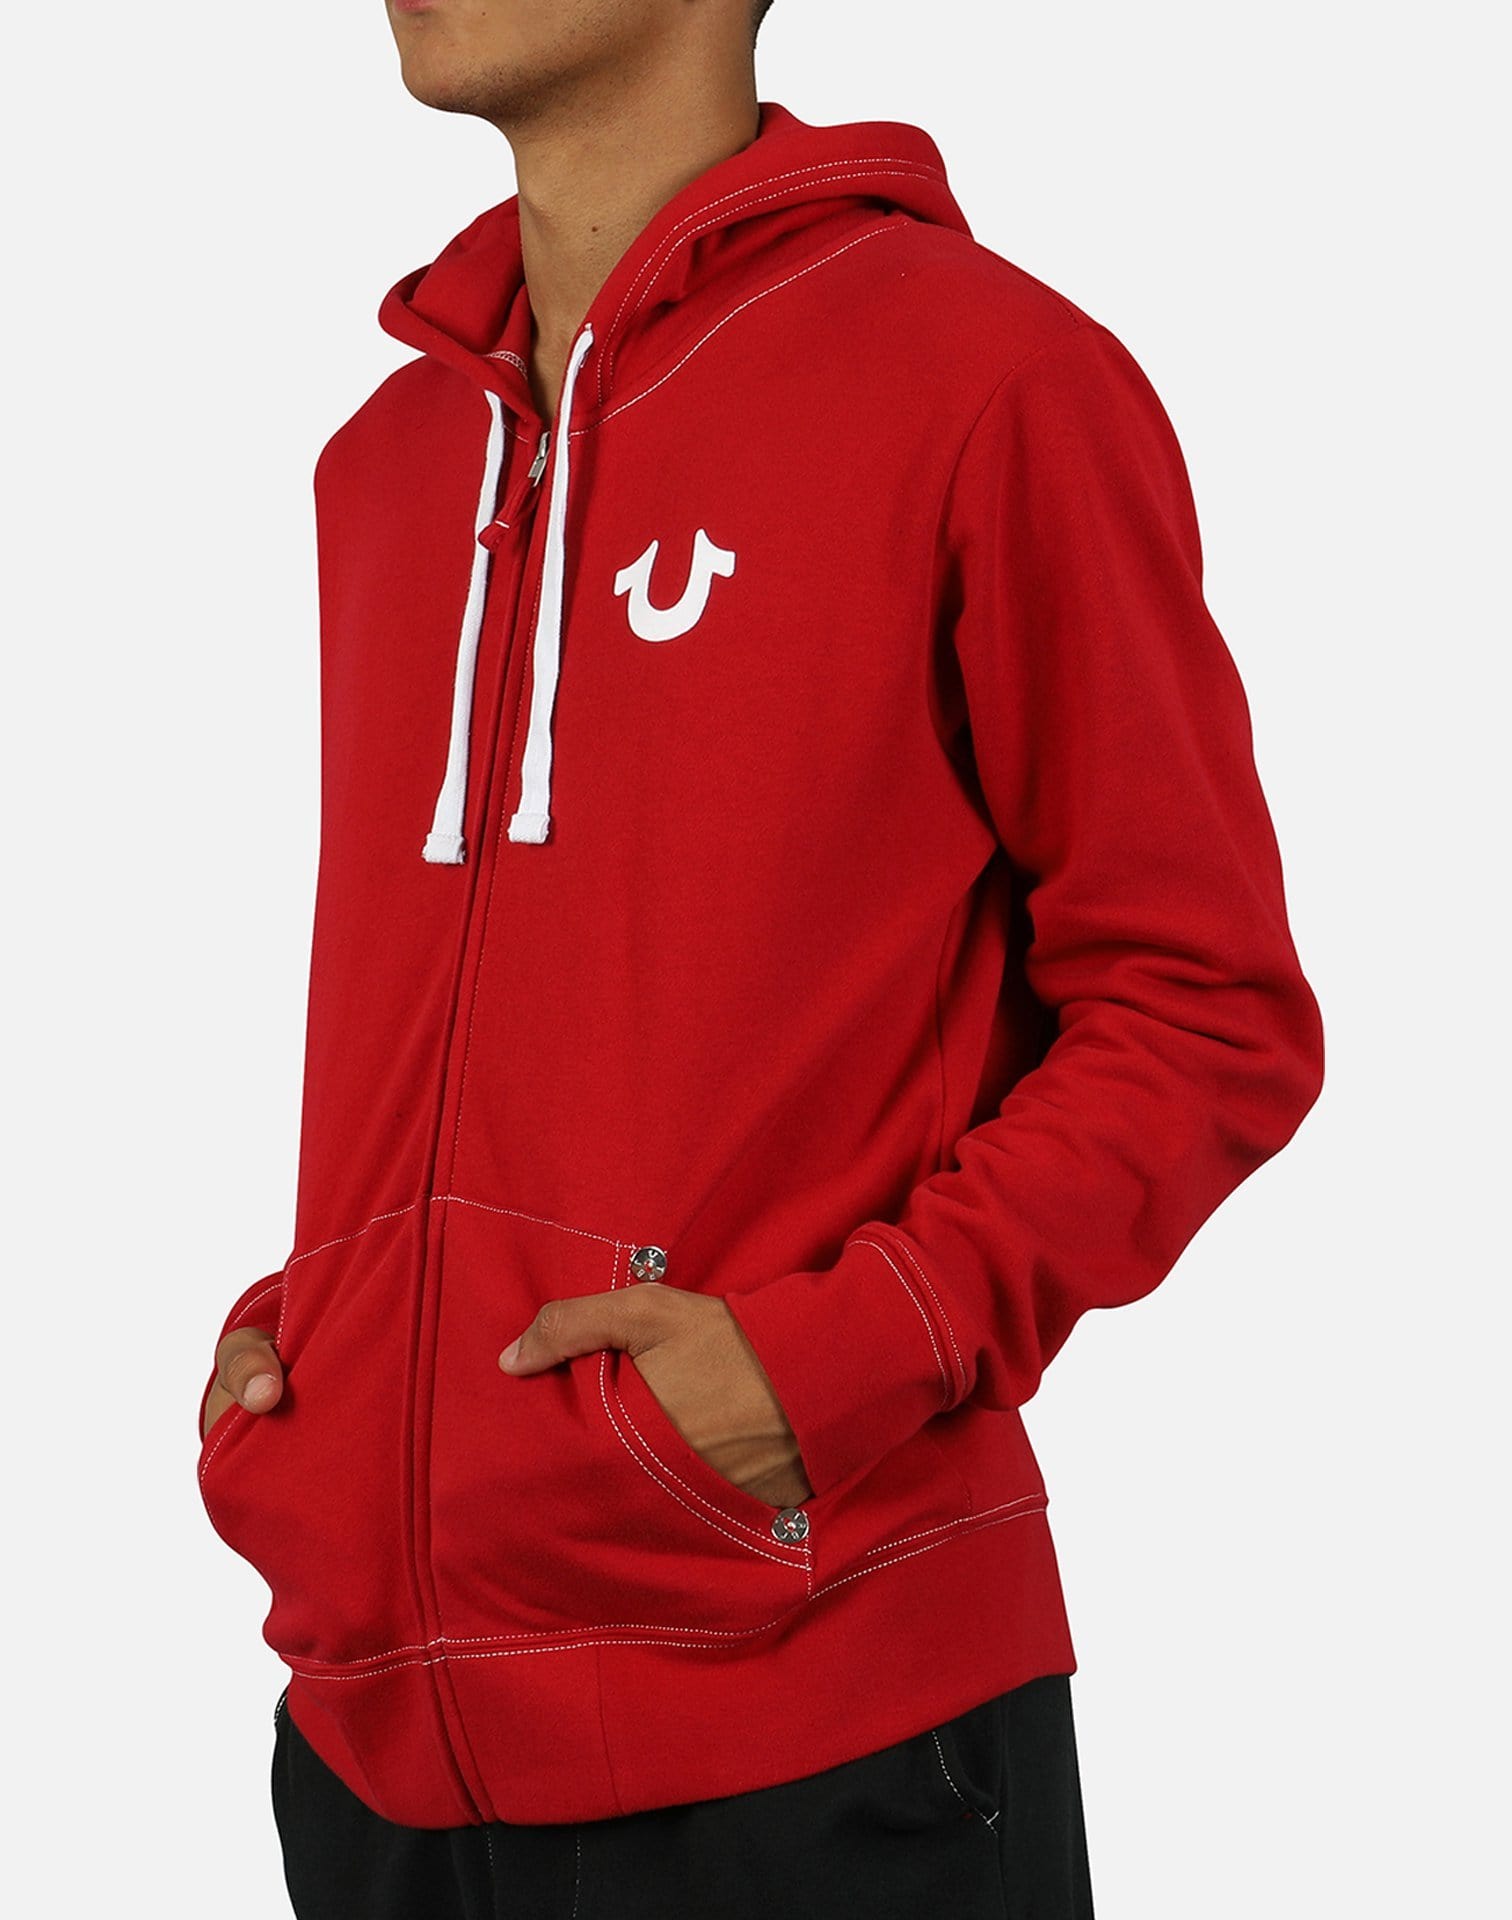 true religion hoodies